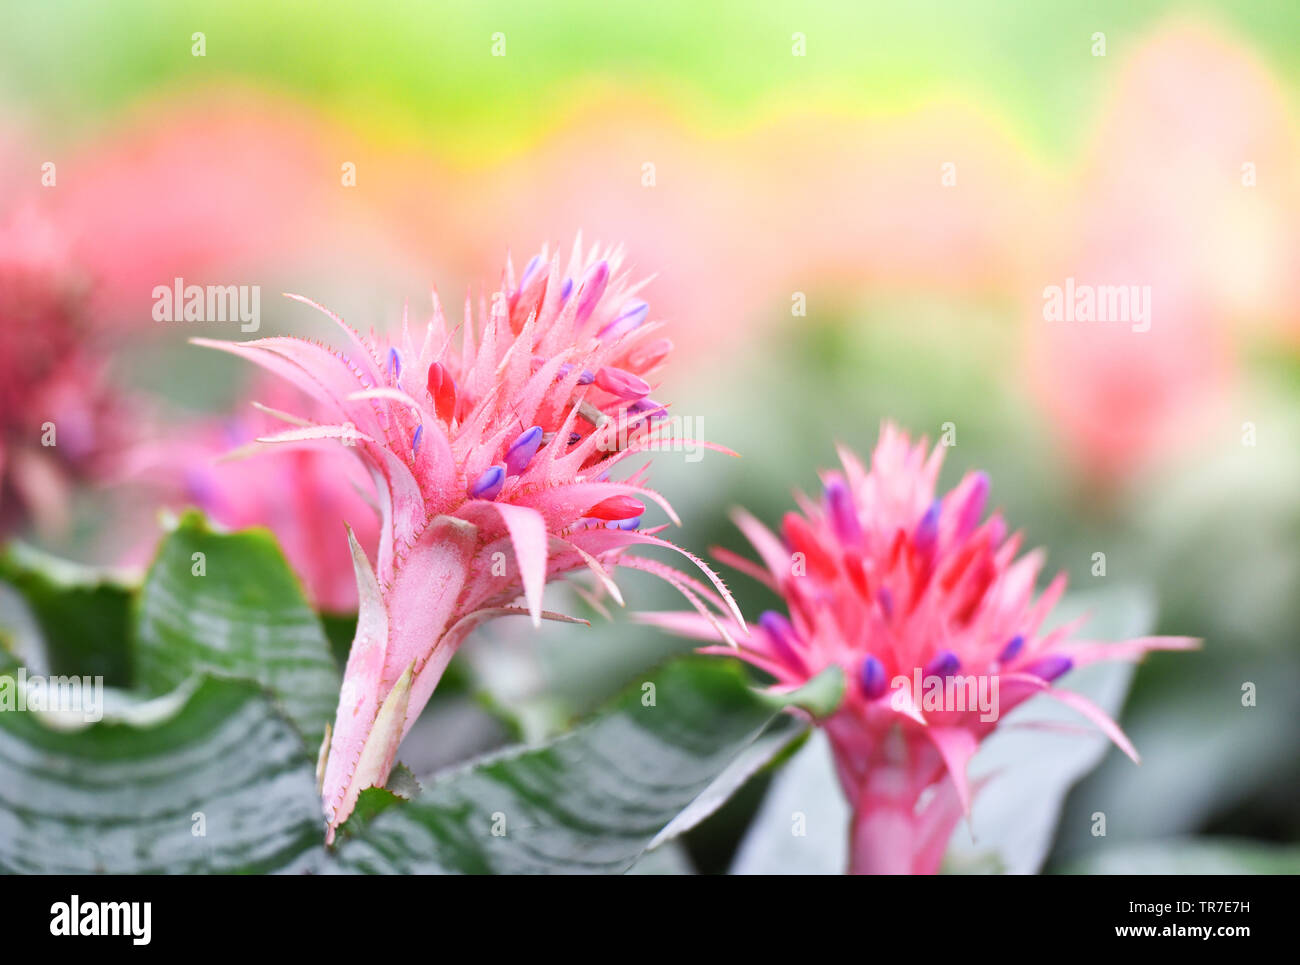 Beautiful pink bromeliad flower in garden and colorful plant background / Aechmea fasciata Bromeliad Stock Photo